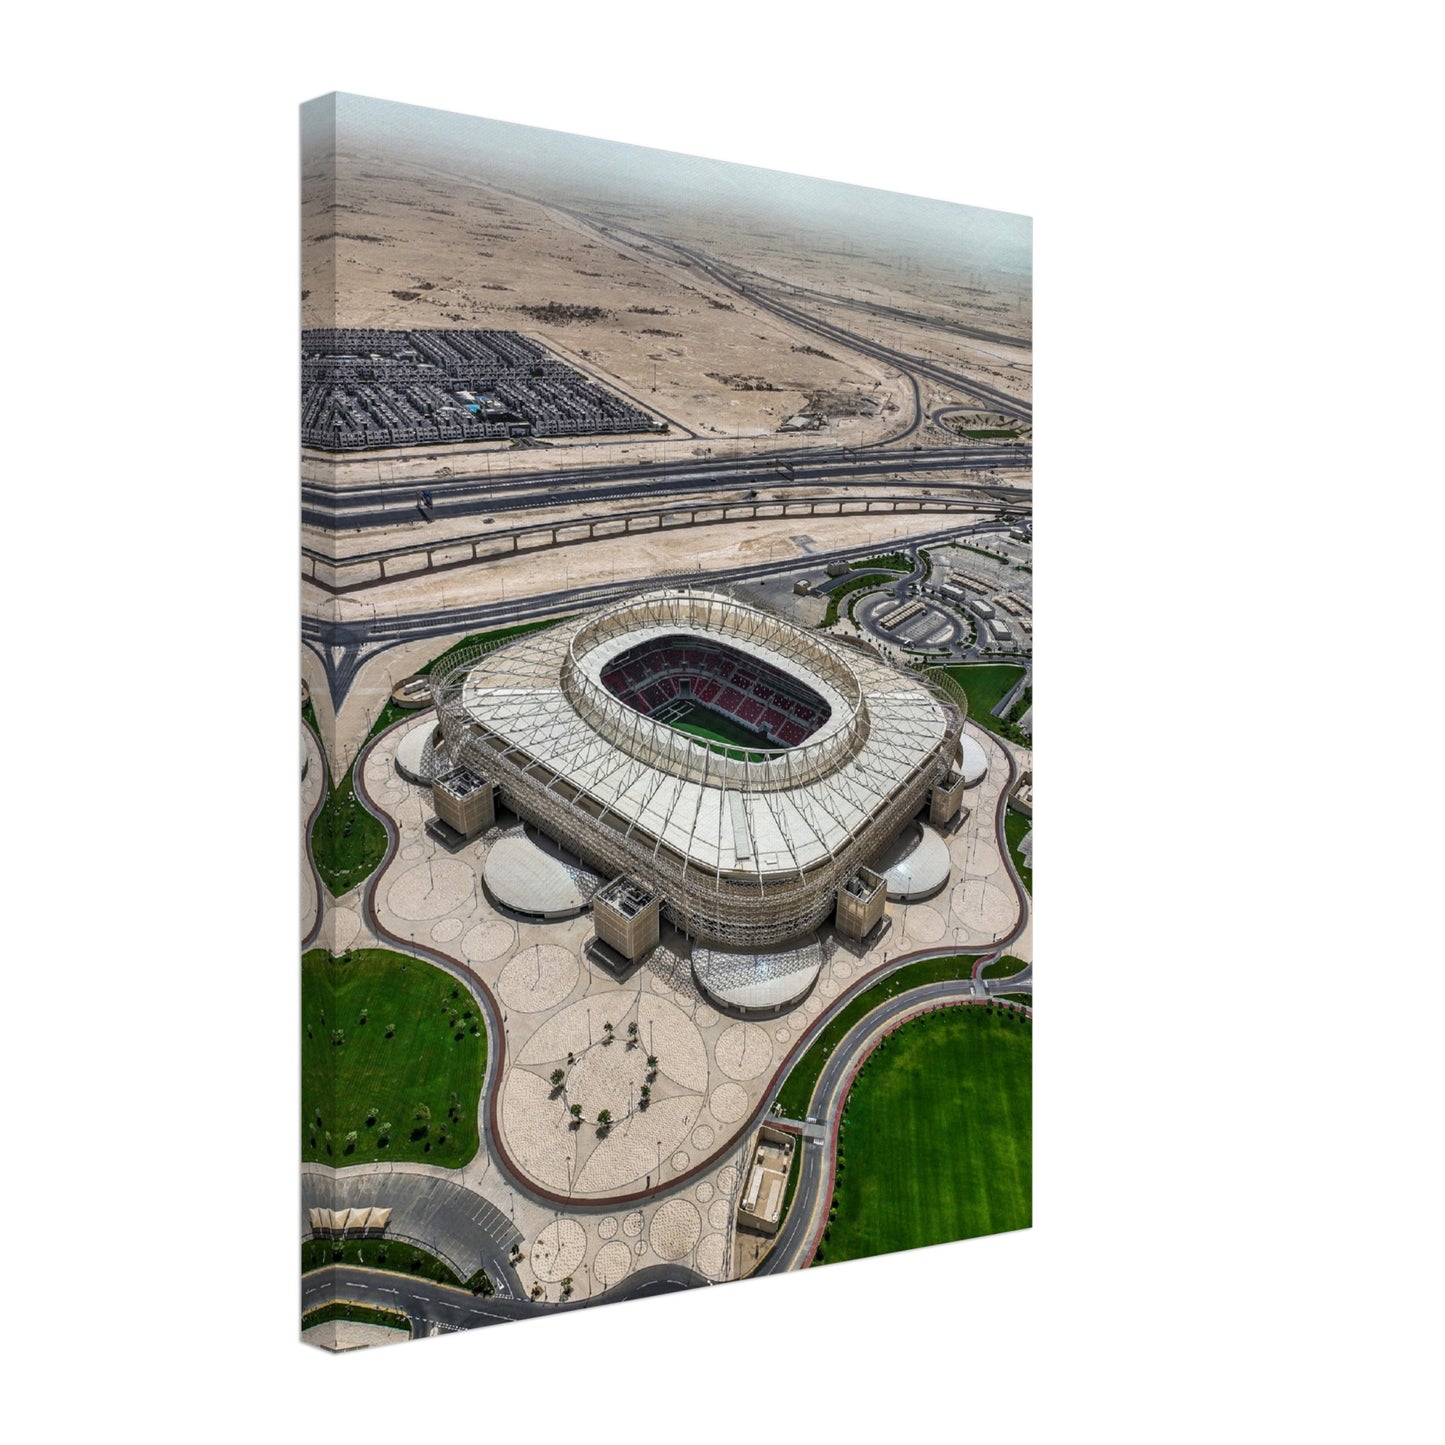 Toile Qatar Ahmad Bin Ali Stadium